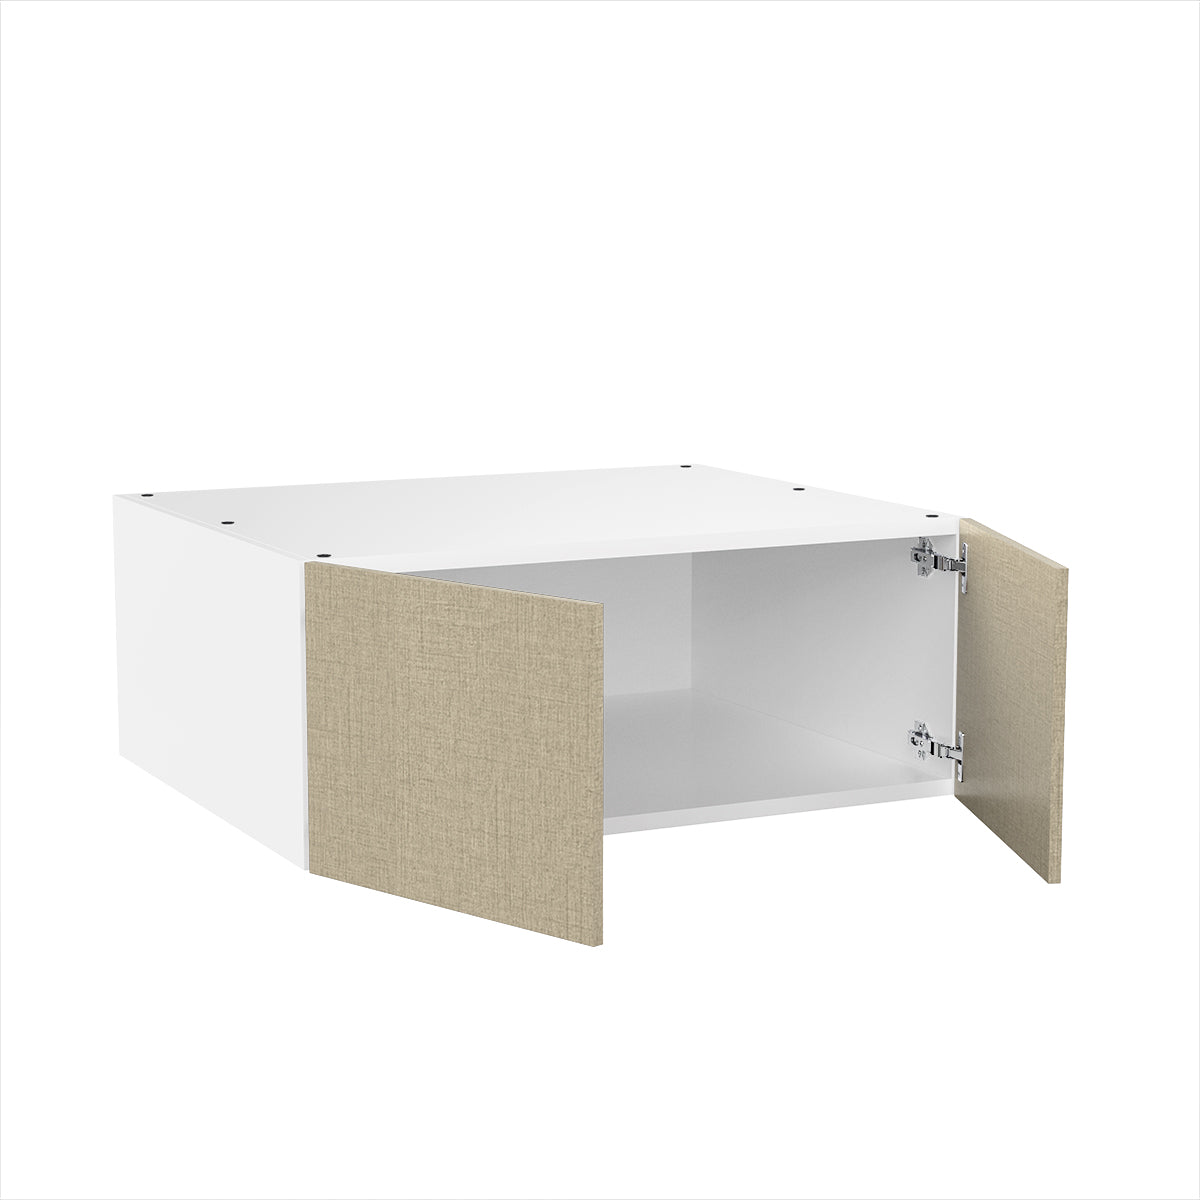 RTA - Fabric Grey - Double Door Refrigerator Wall Cabinets | 33"W x 15"H x 24"D